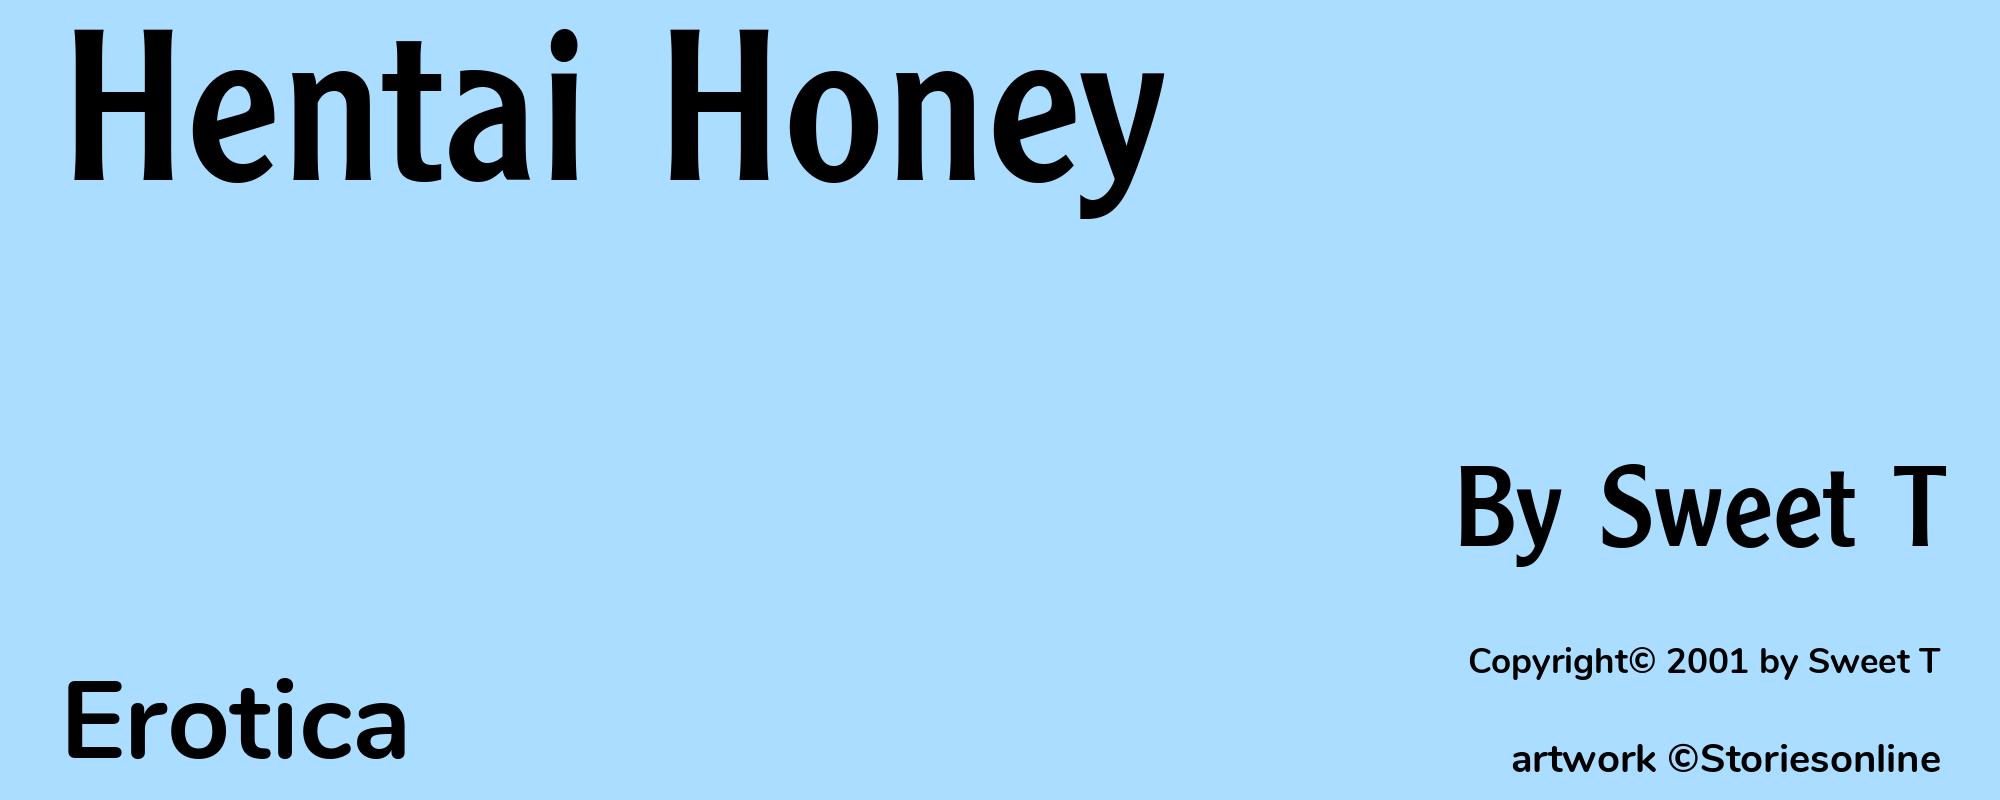 Hentai Honey - Cover